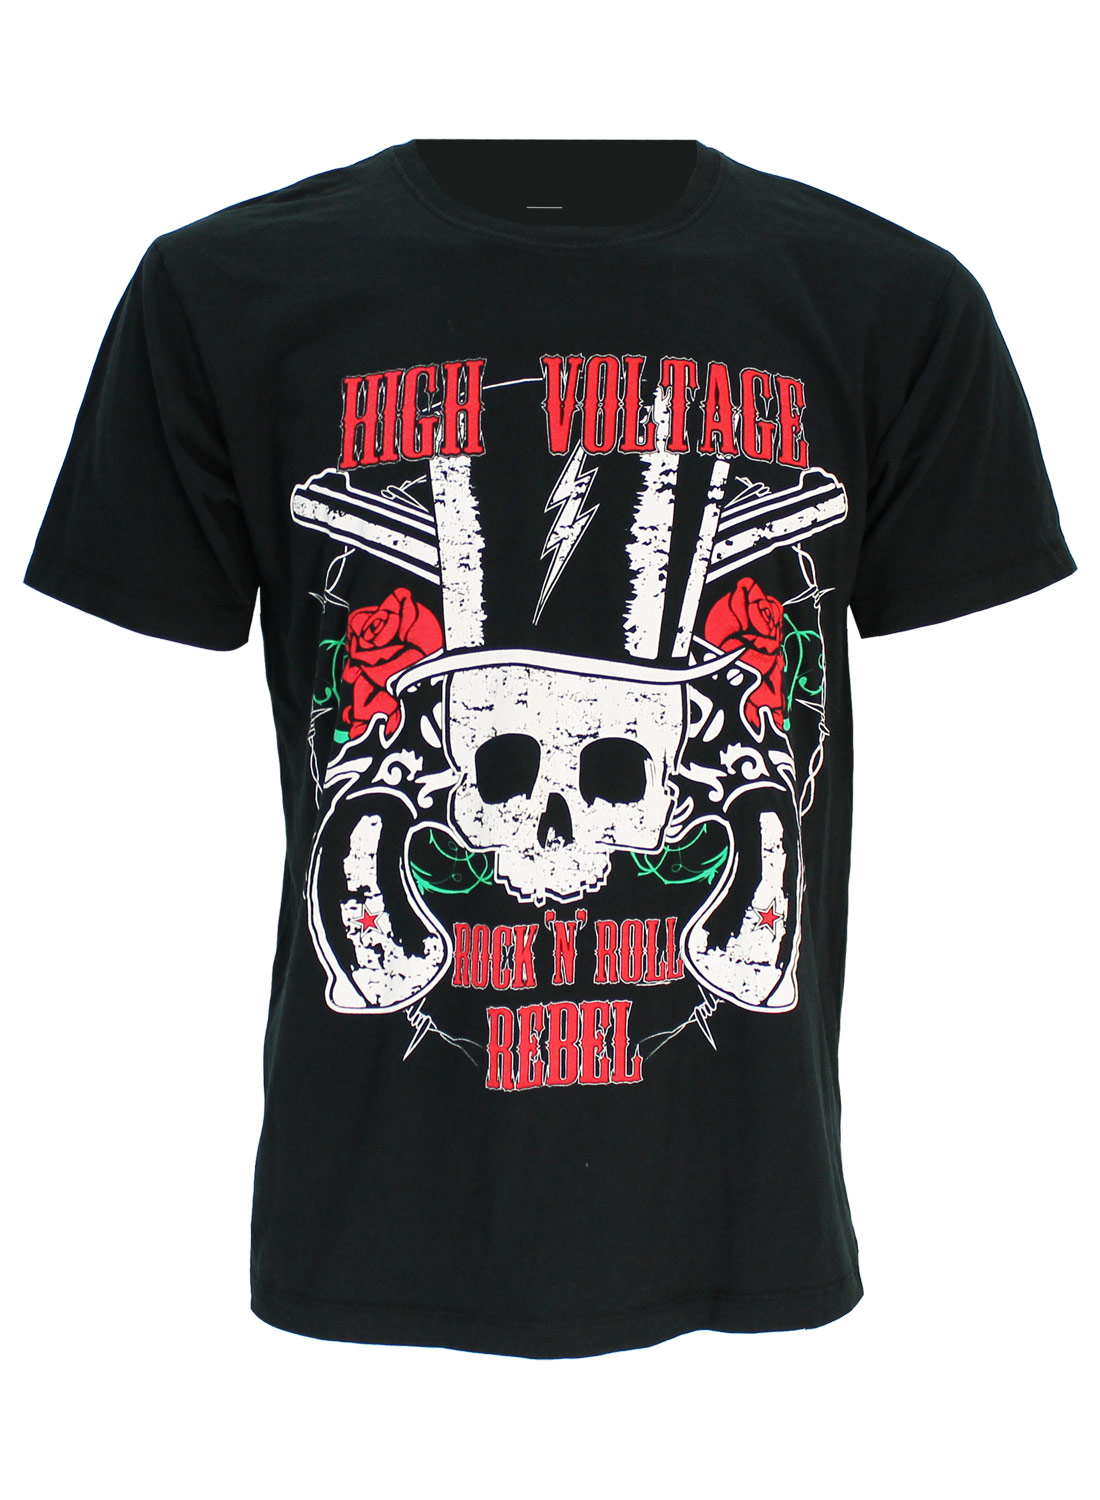 Restless 'N' Wild Rock 'N' Roll Rebell T-shirt Black